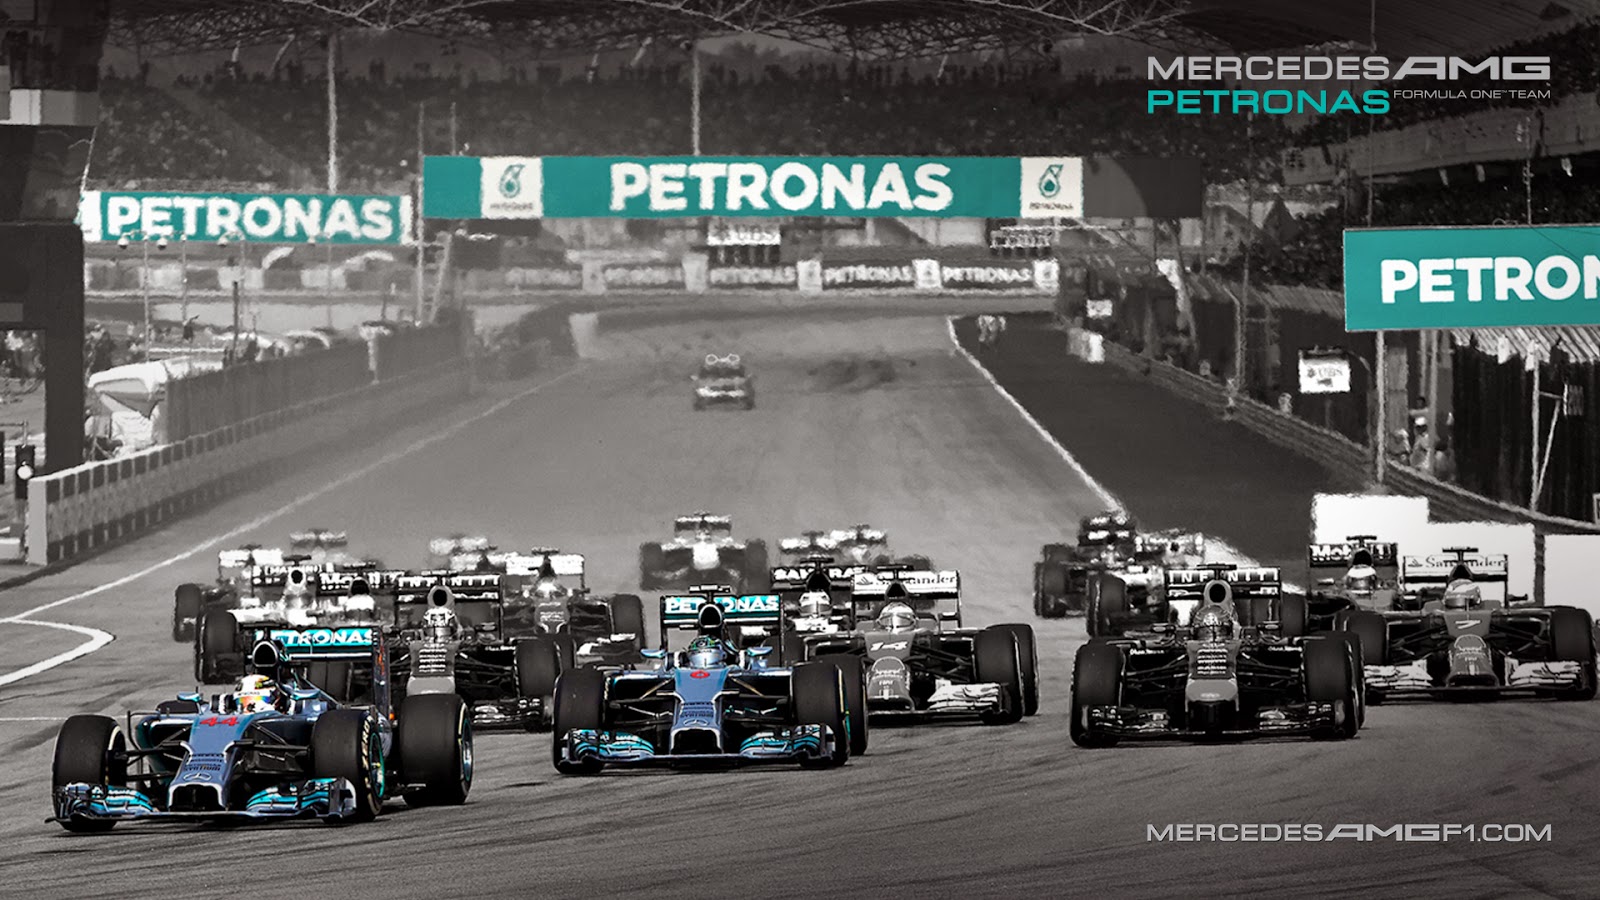 Mercedes Amg Petronas W05 F1 Wallpaper Kfzoom